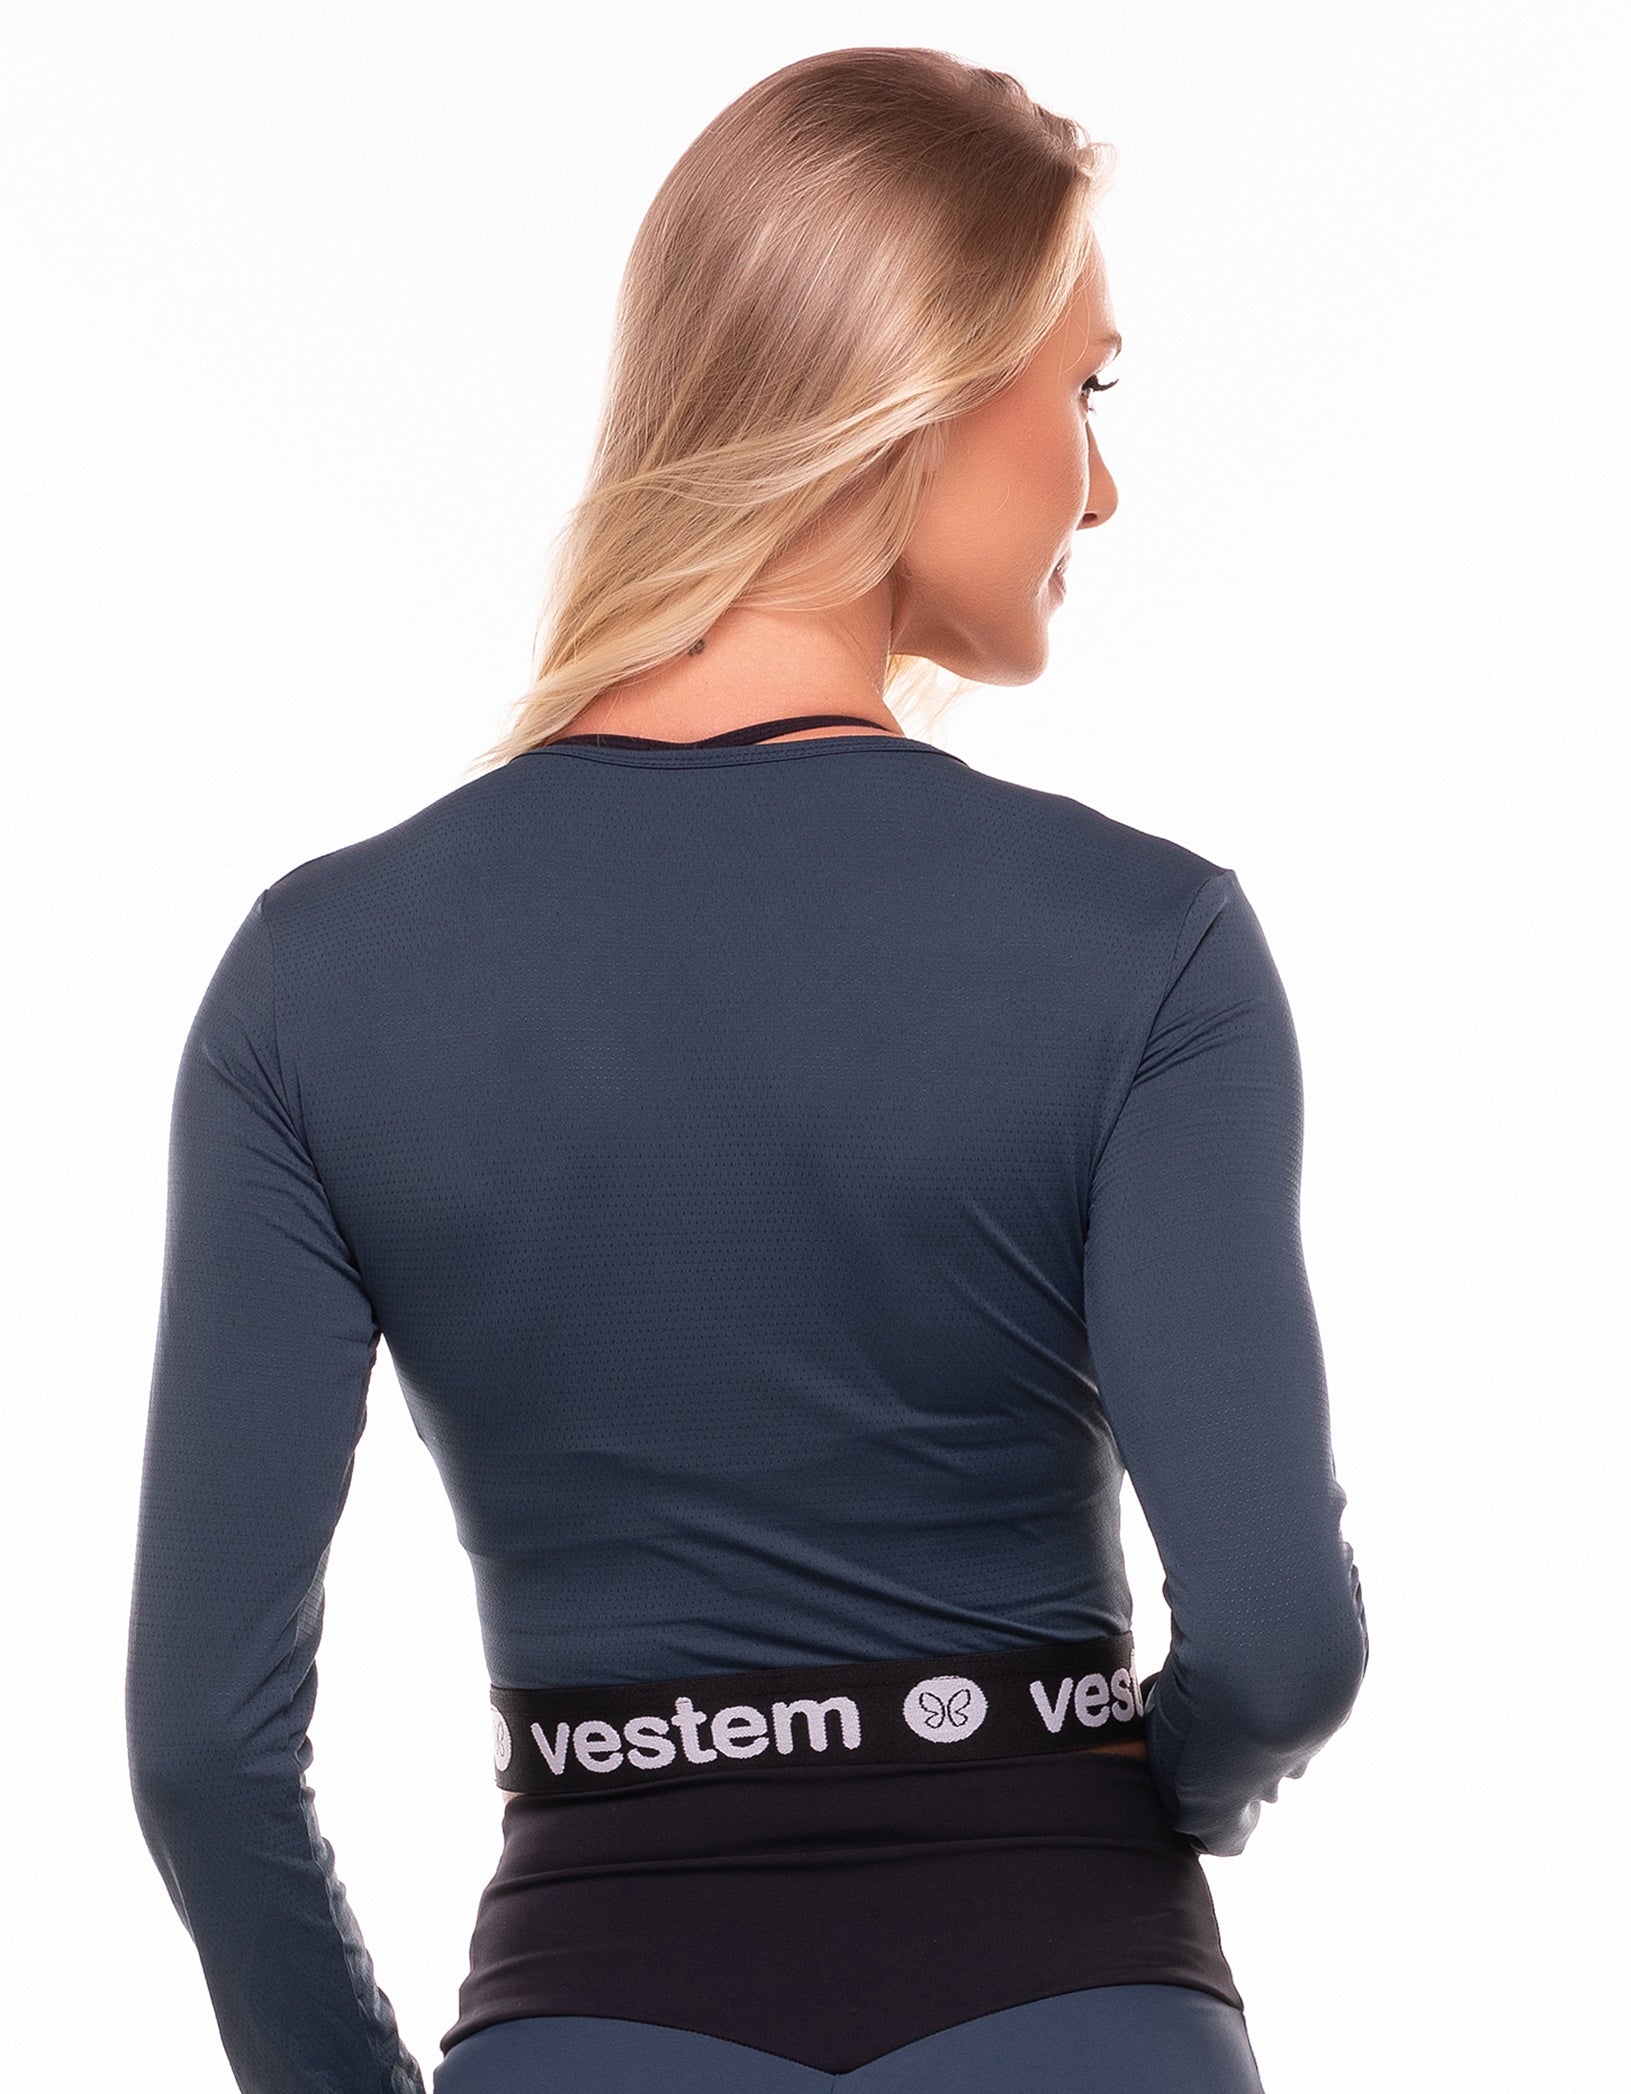 Vestem - Shark Blue Heart Long Sleeve Dry Fit Shirt - BML340.C0002